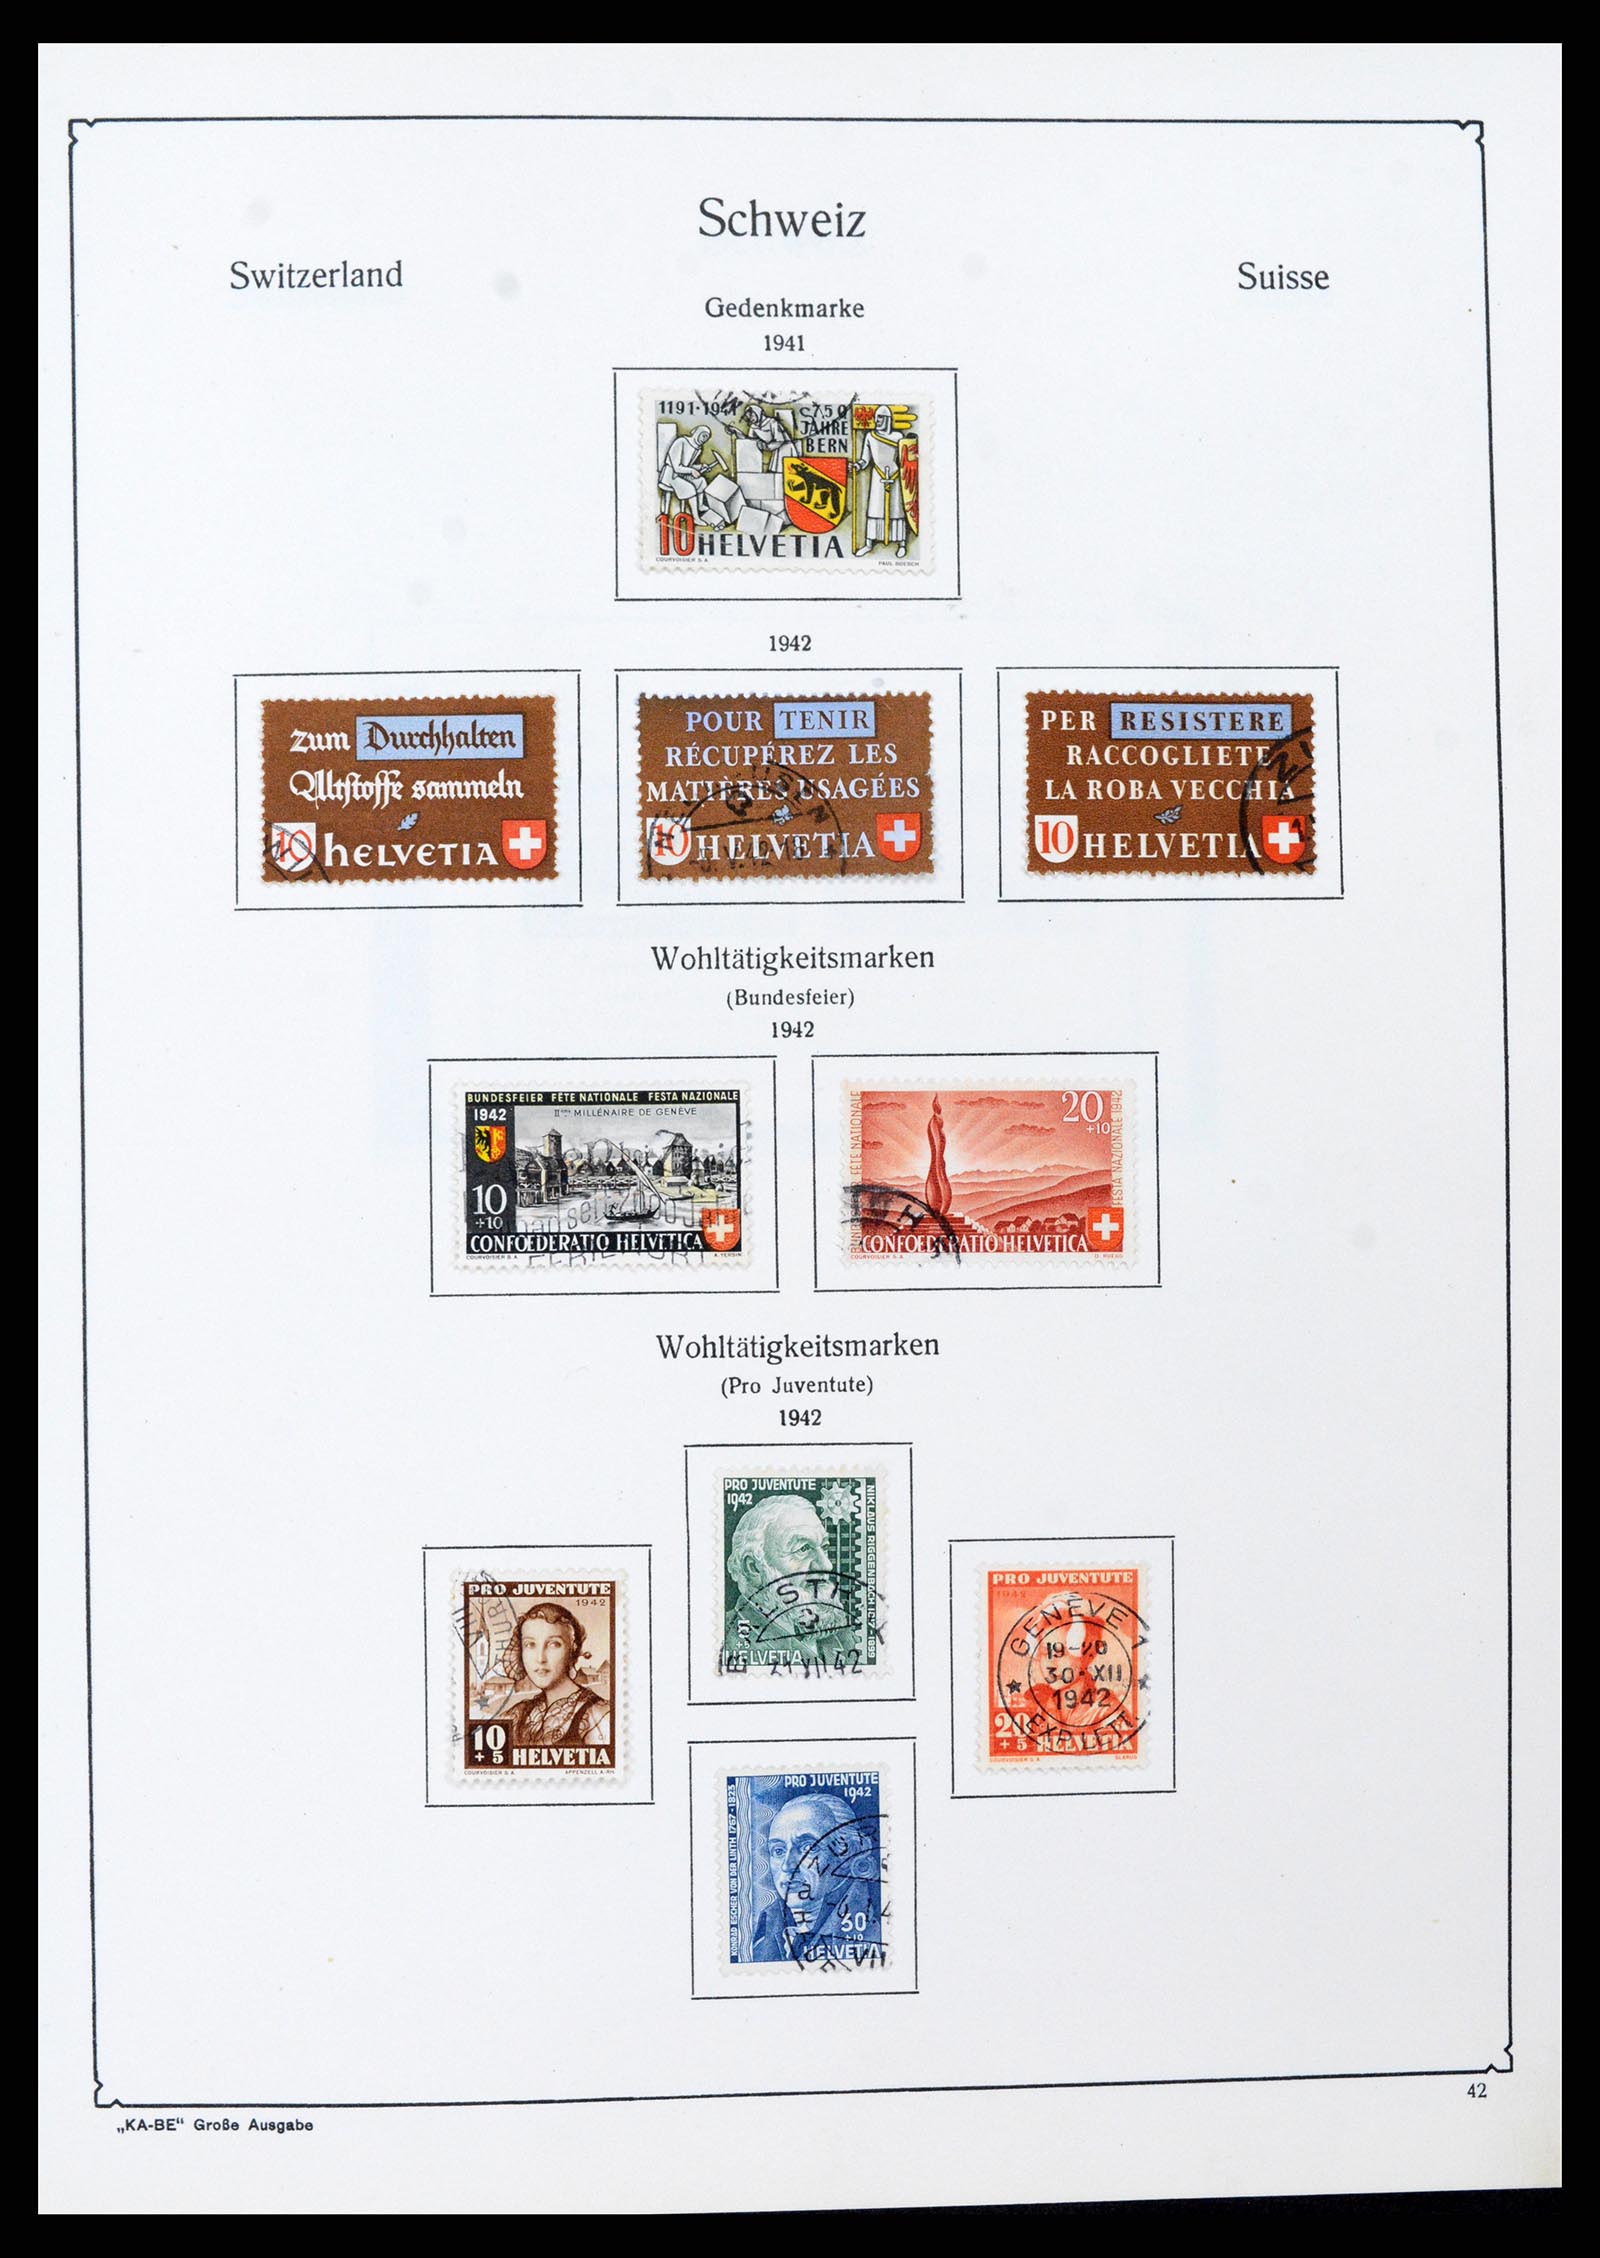 37588 040 - Stamp collection 37588 Switzerland 1854-1974.